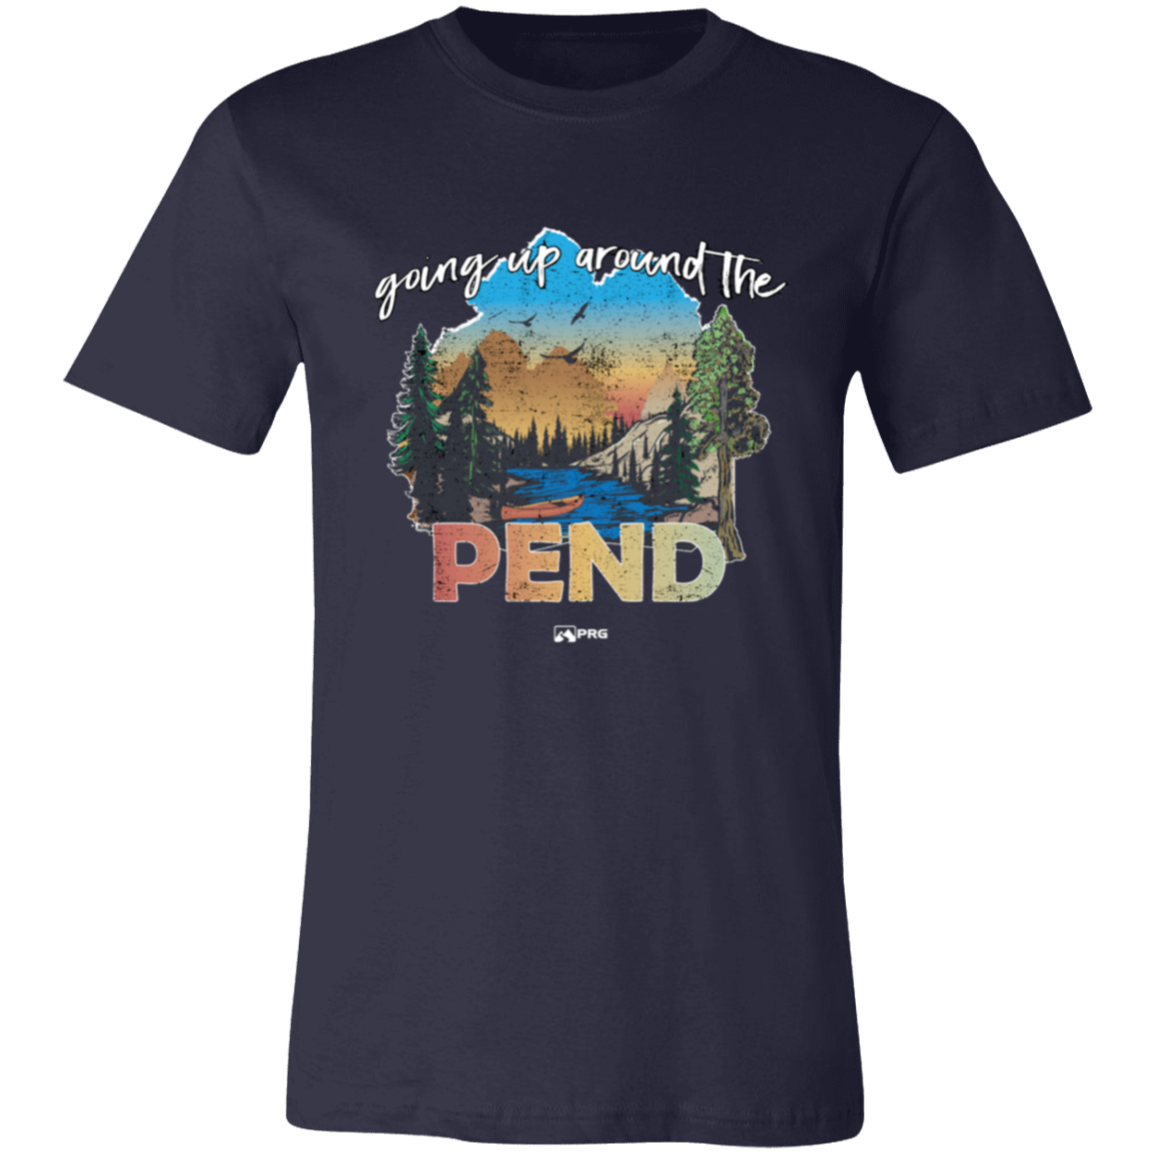 Around the Pend - Shirt